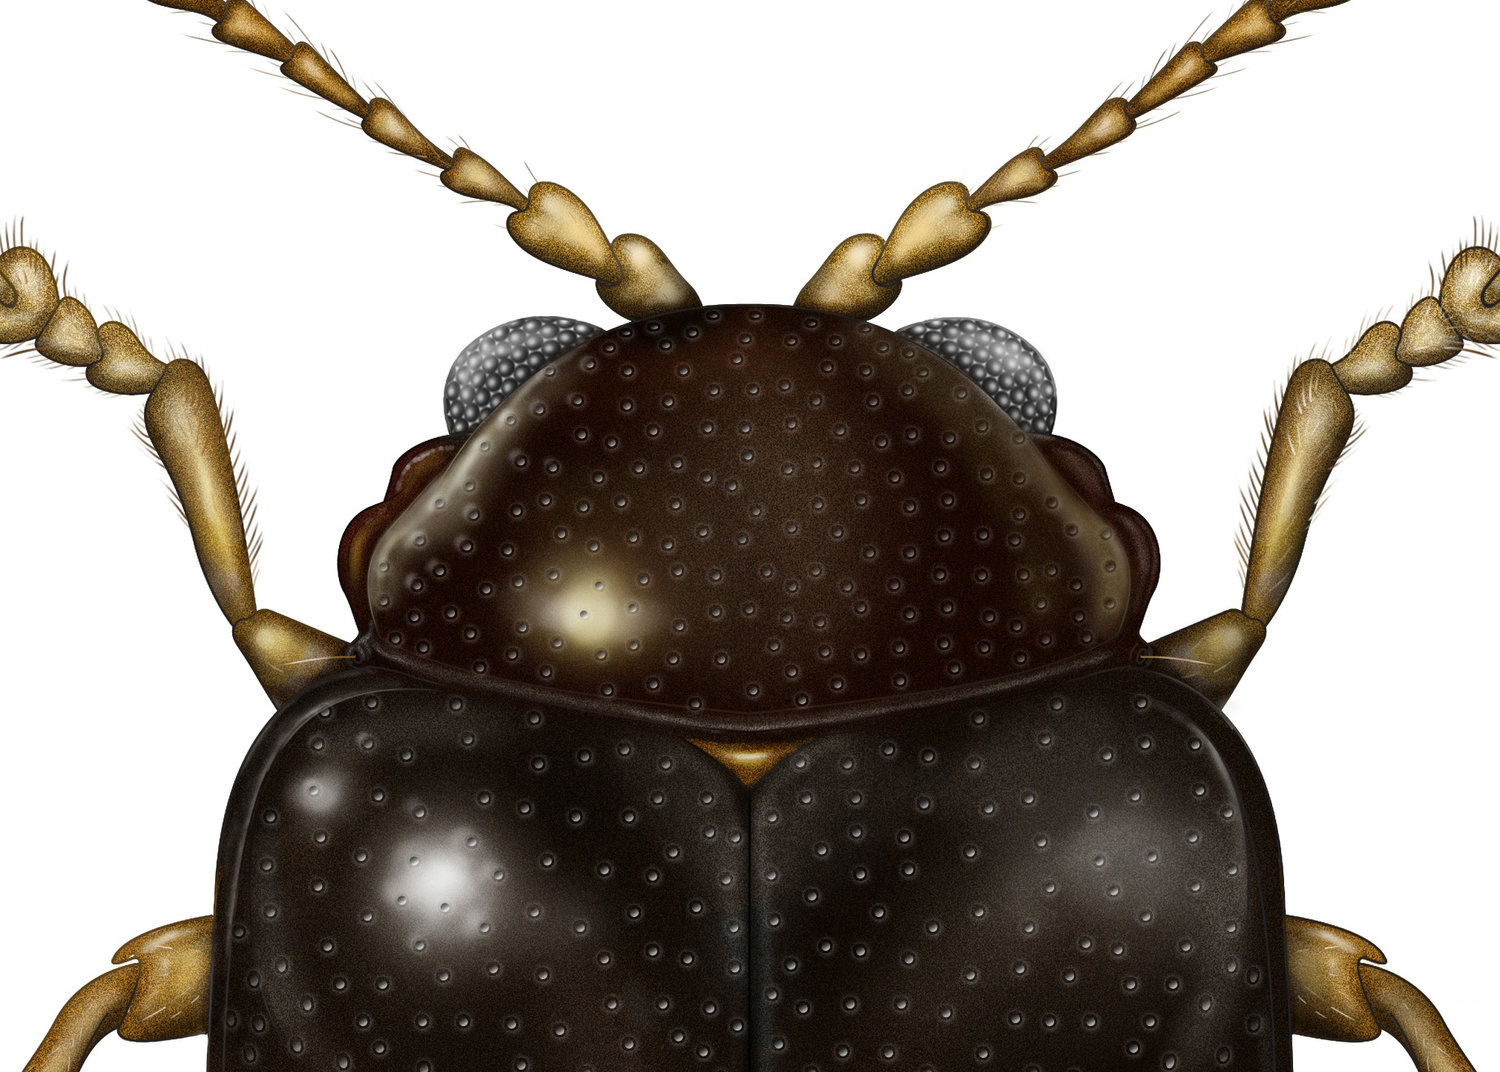 Flea+Beetle+Specimen+Illustration+by+Jillian+Ditner.jpg